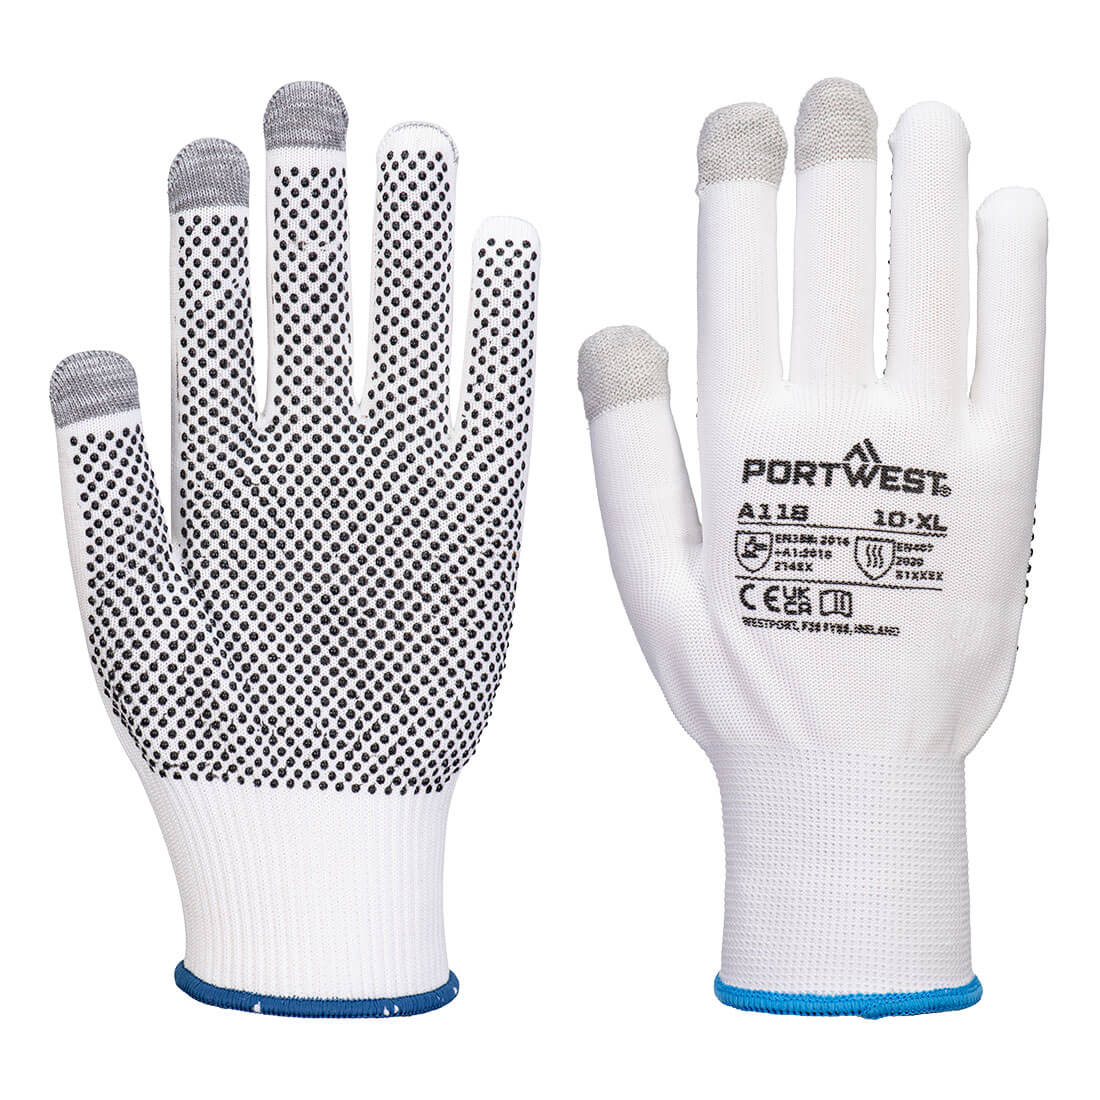 Grip 13 PVC Dotted Touchscreen Glove (Pk12)  (A118)